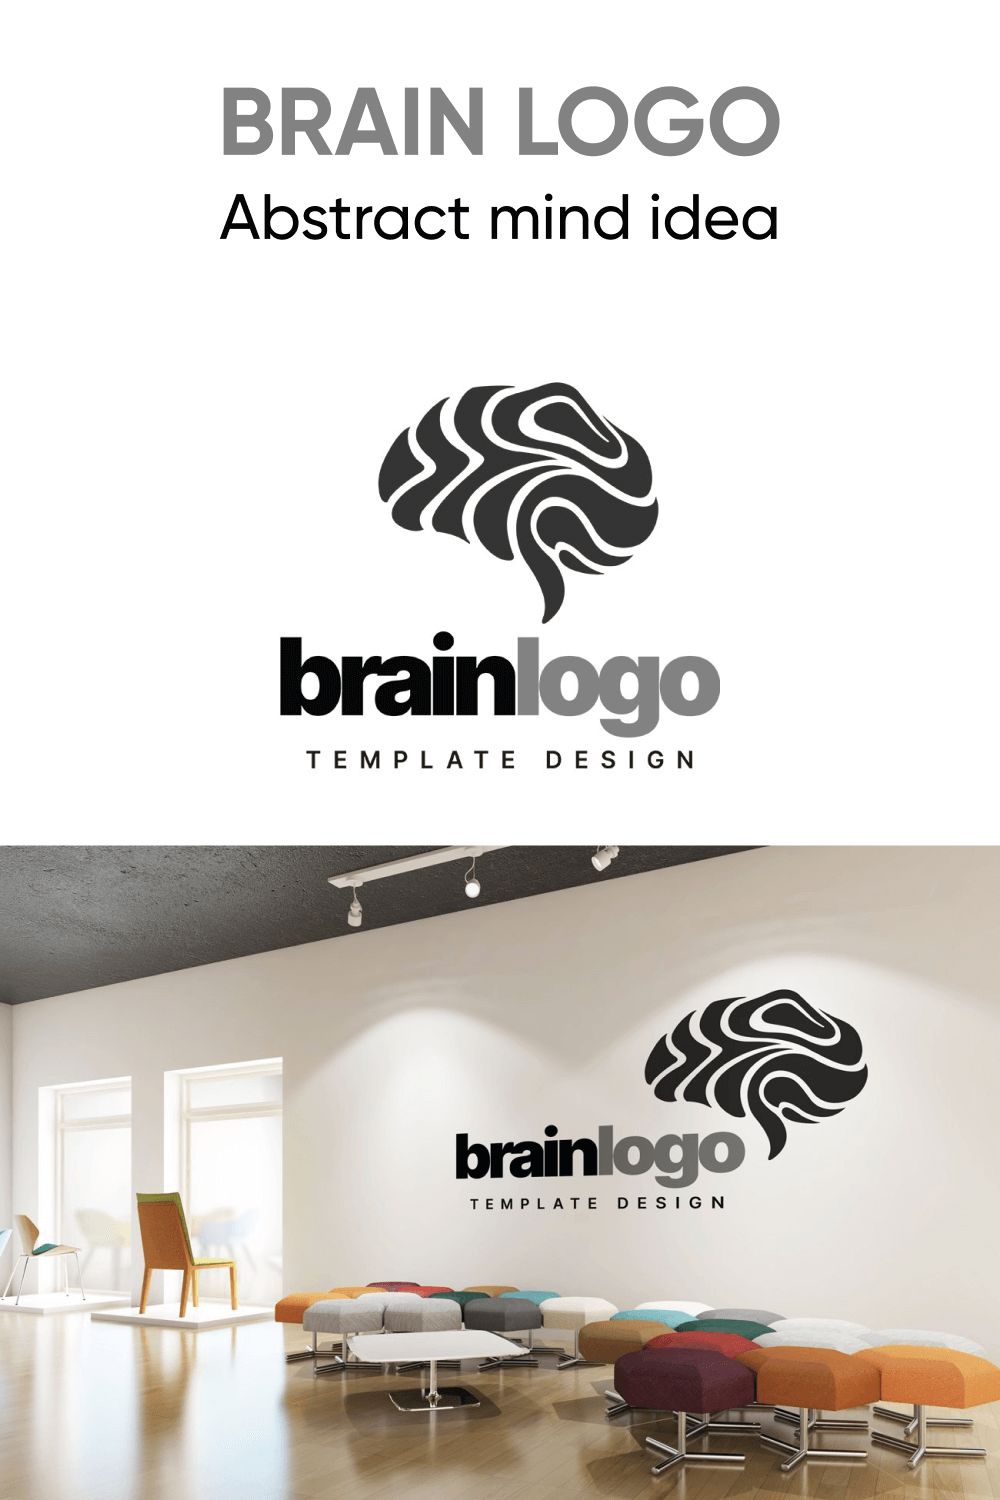 Brain logo theme for your logo.